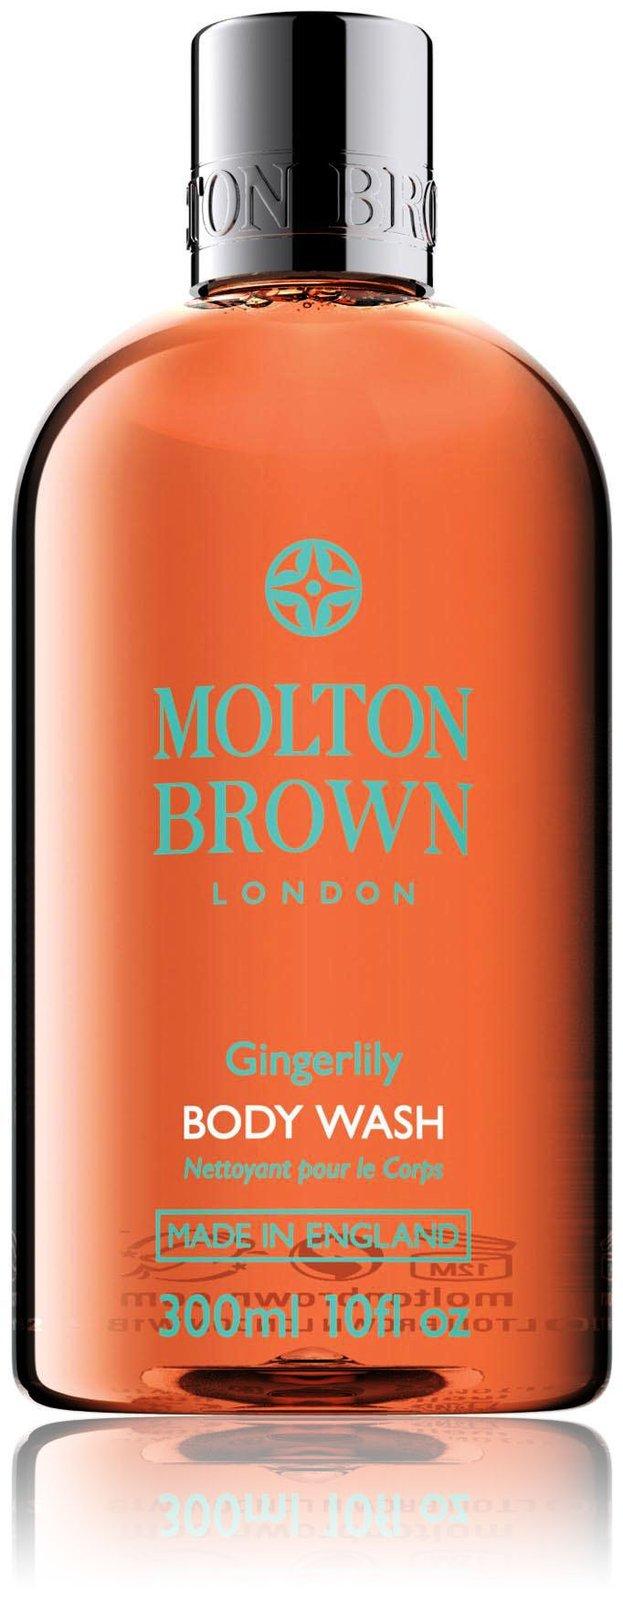 Molton Brown Body Wash - Gingerlily - 10 Oz